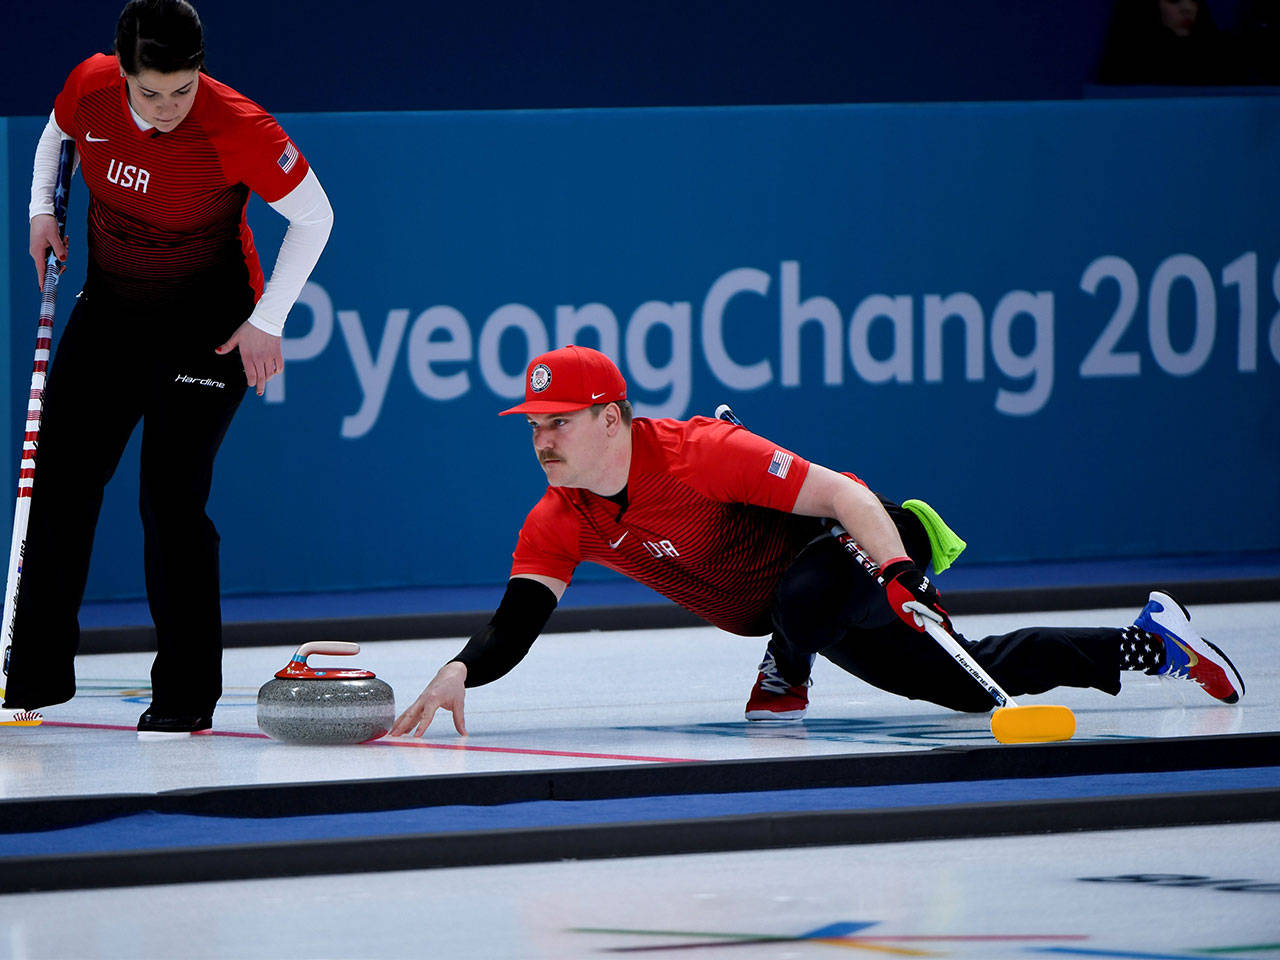 Curling In Pyeong Chang 2018 Wallpaper